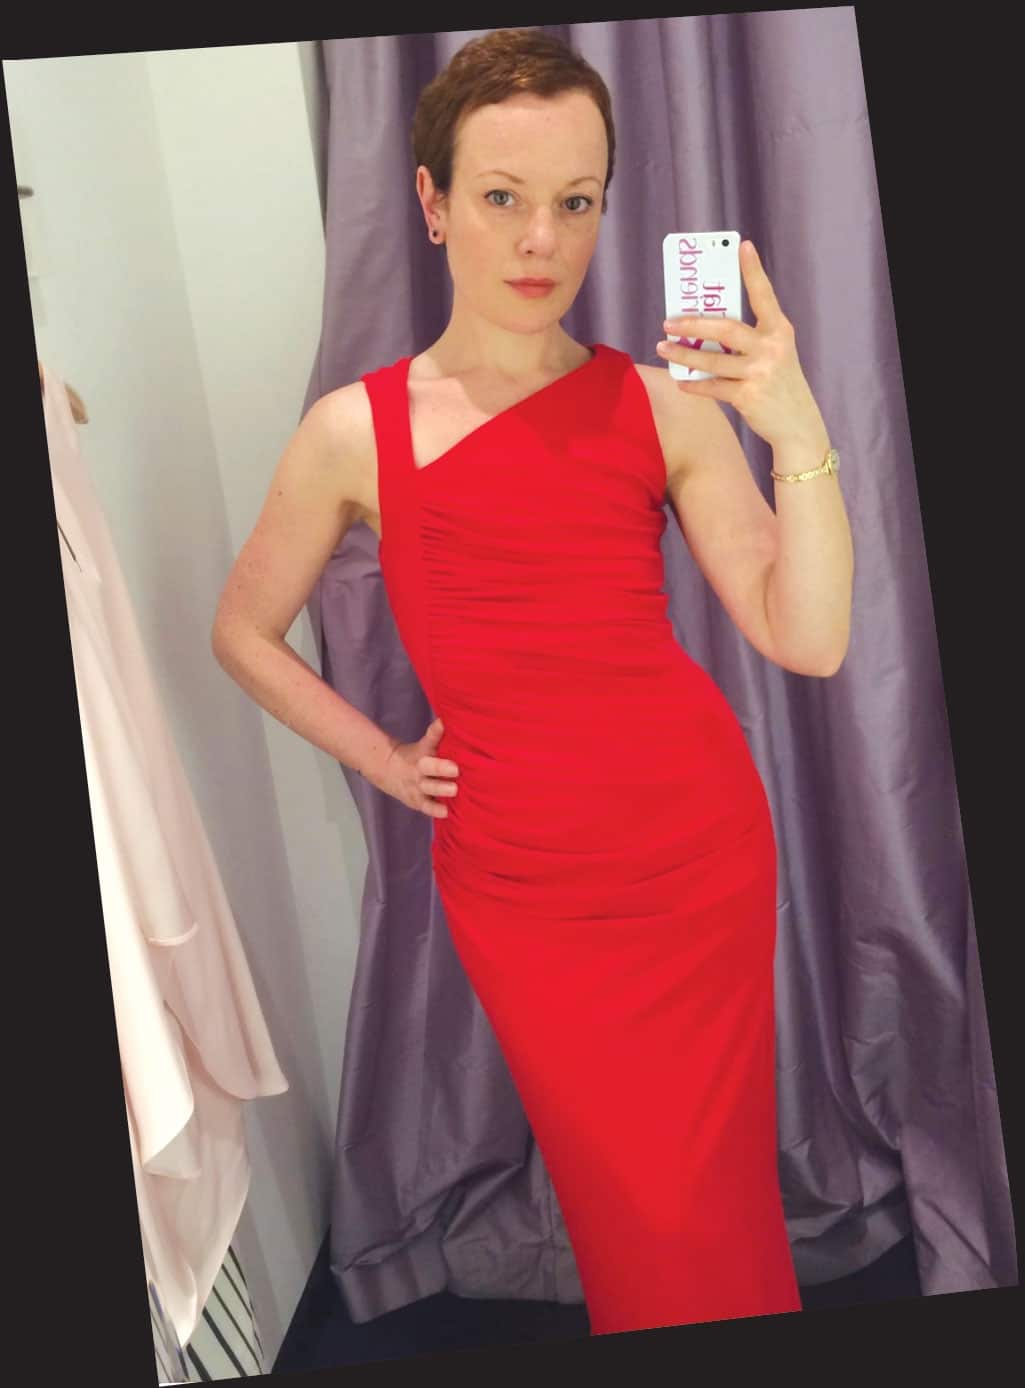 woman wearing red dress